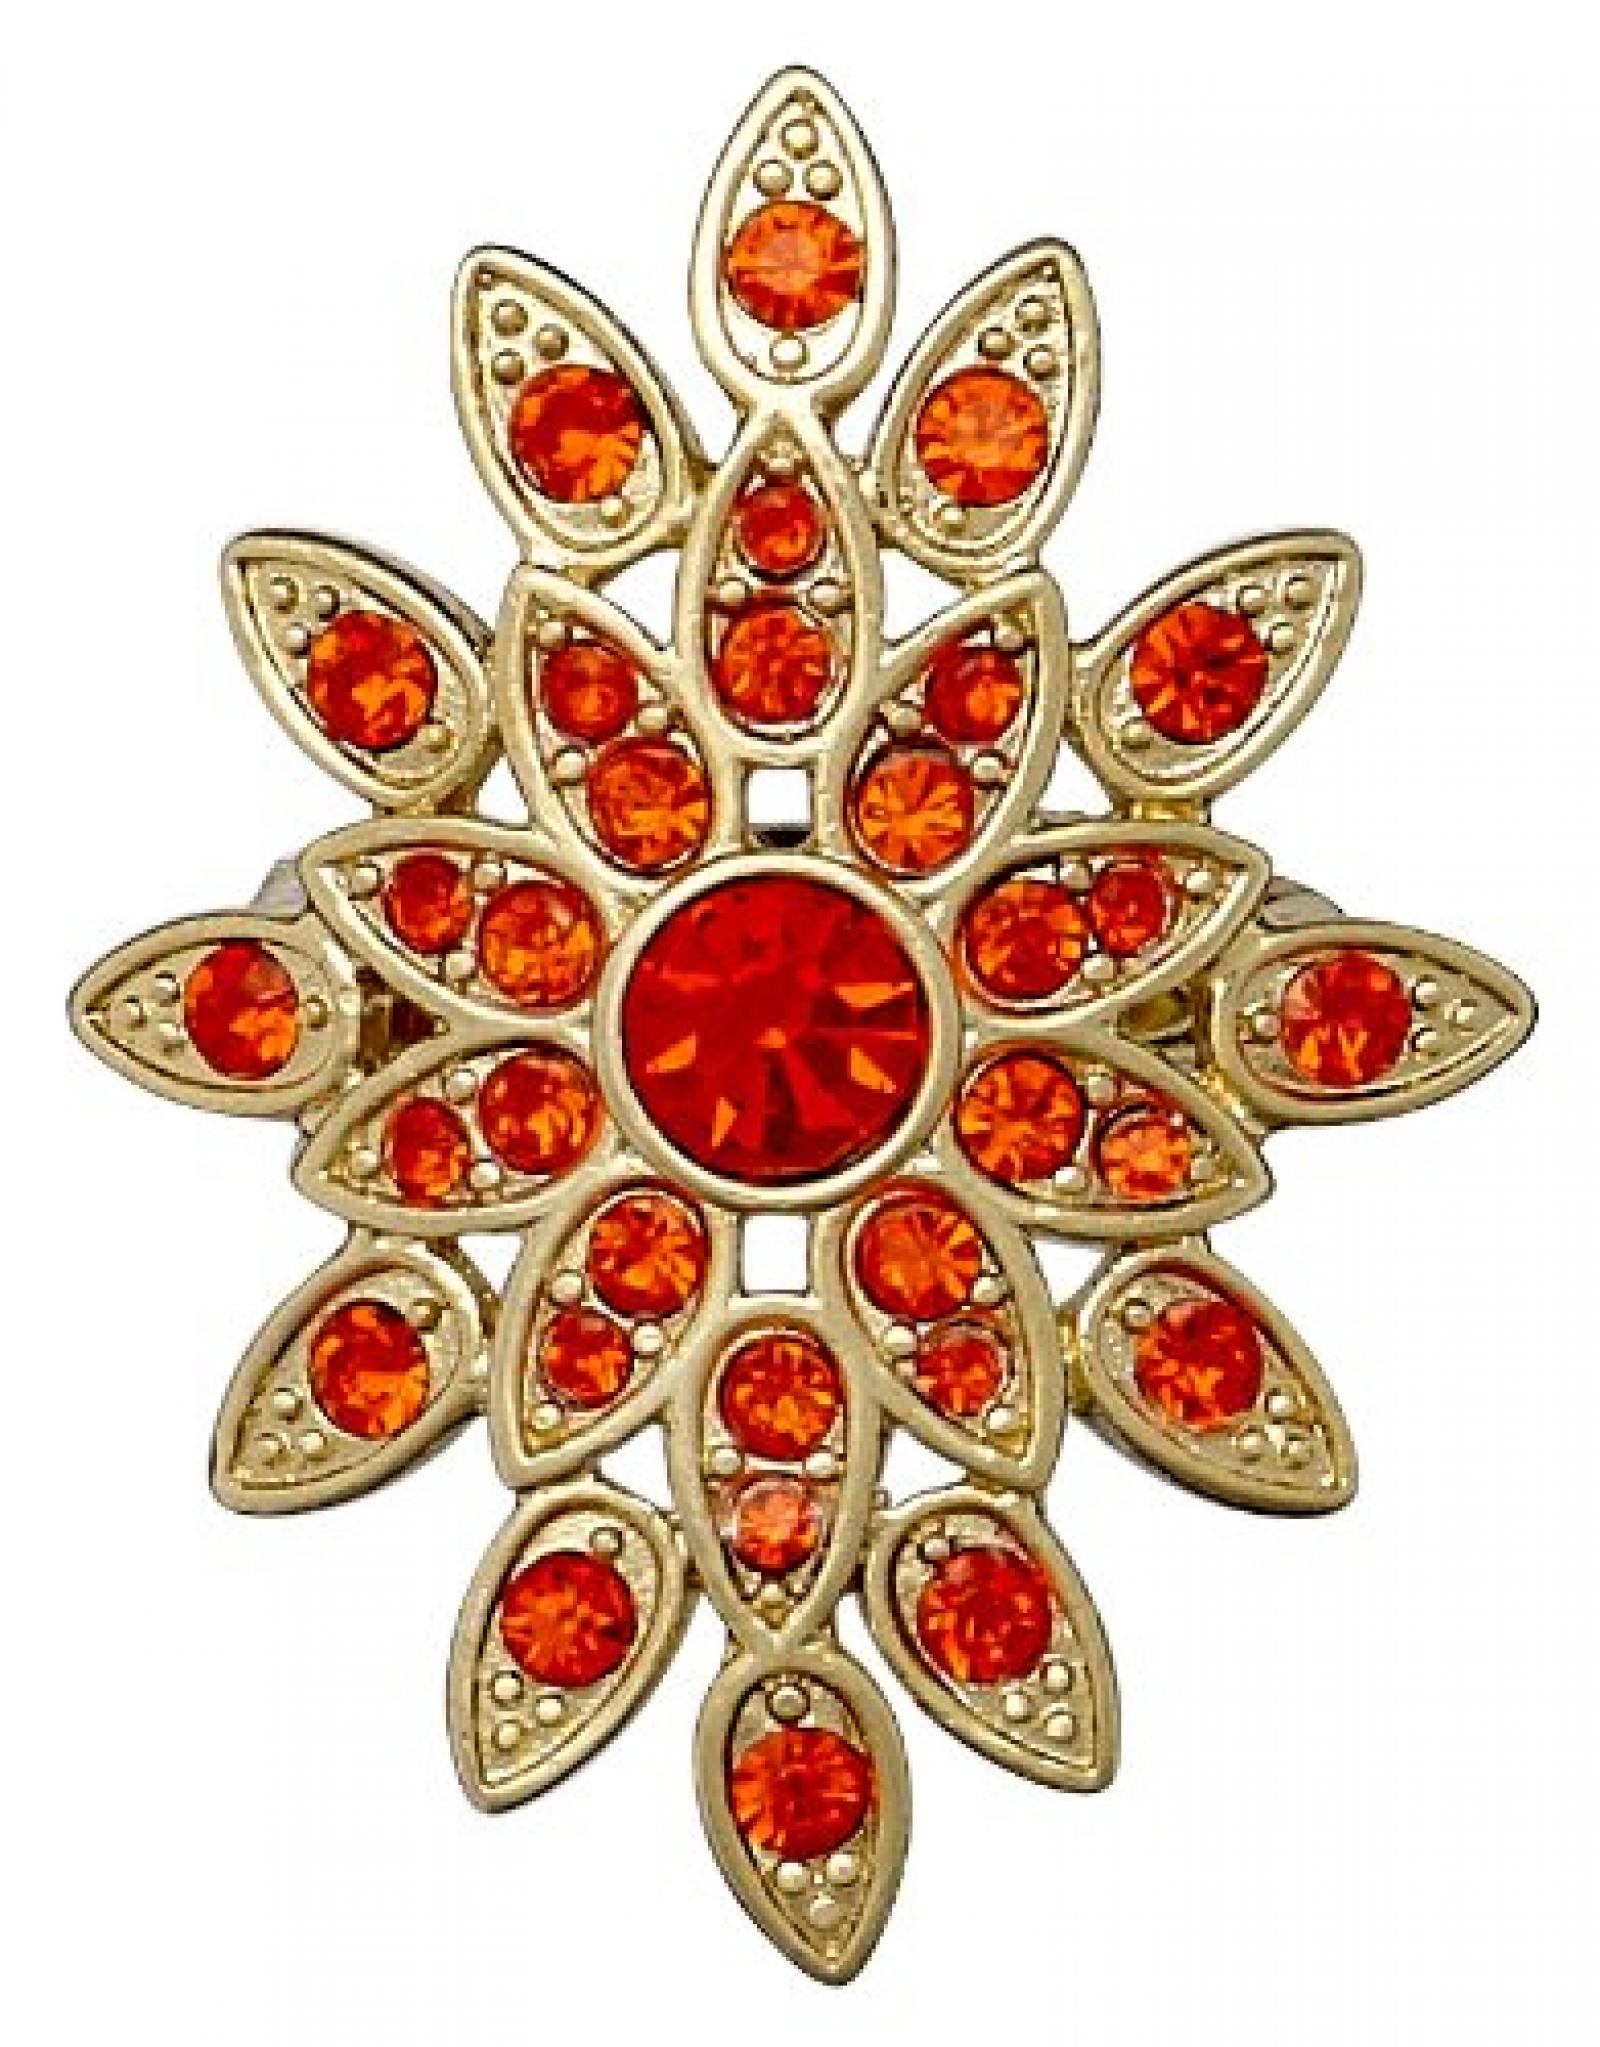 Pilgrim Jewelry Damen-Ring Messing aus der Serie vergoldet,orange 3.4 cm Gr. 53 (16.9) 331322324 